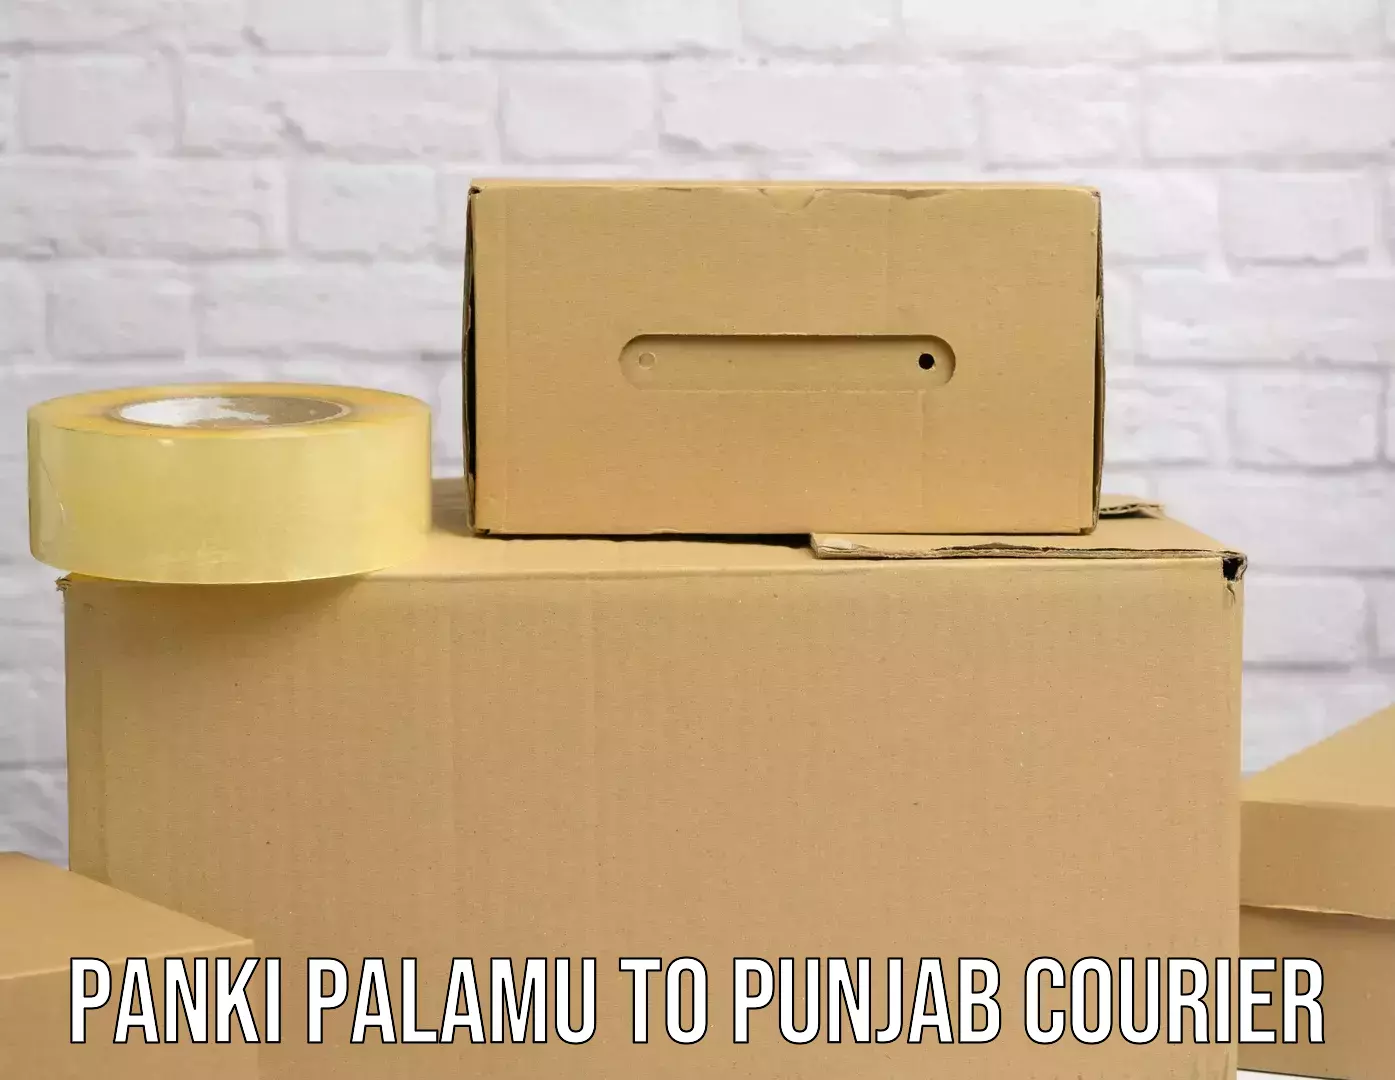 High-performance logistics Panki Palamu to Punjab